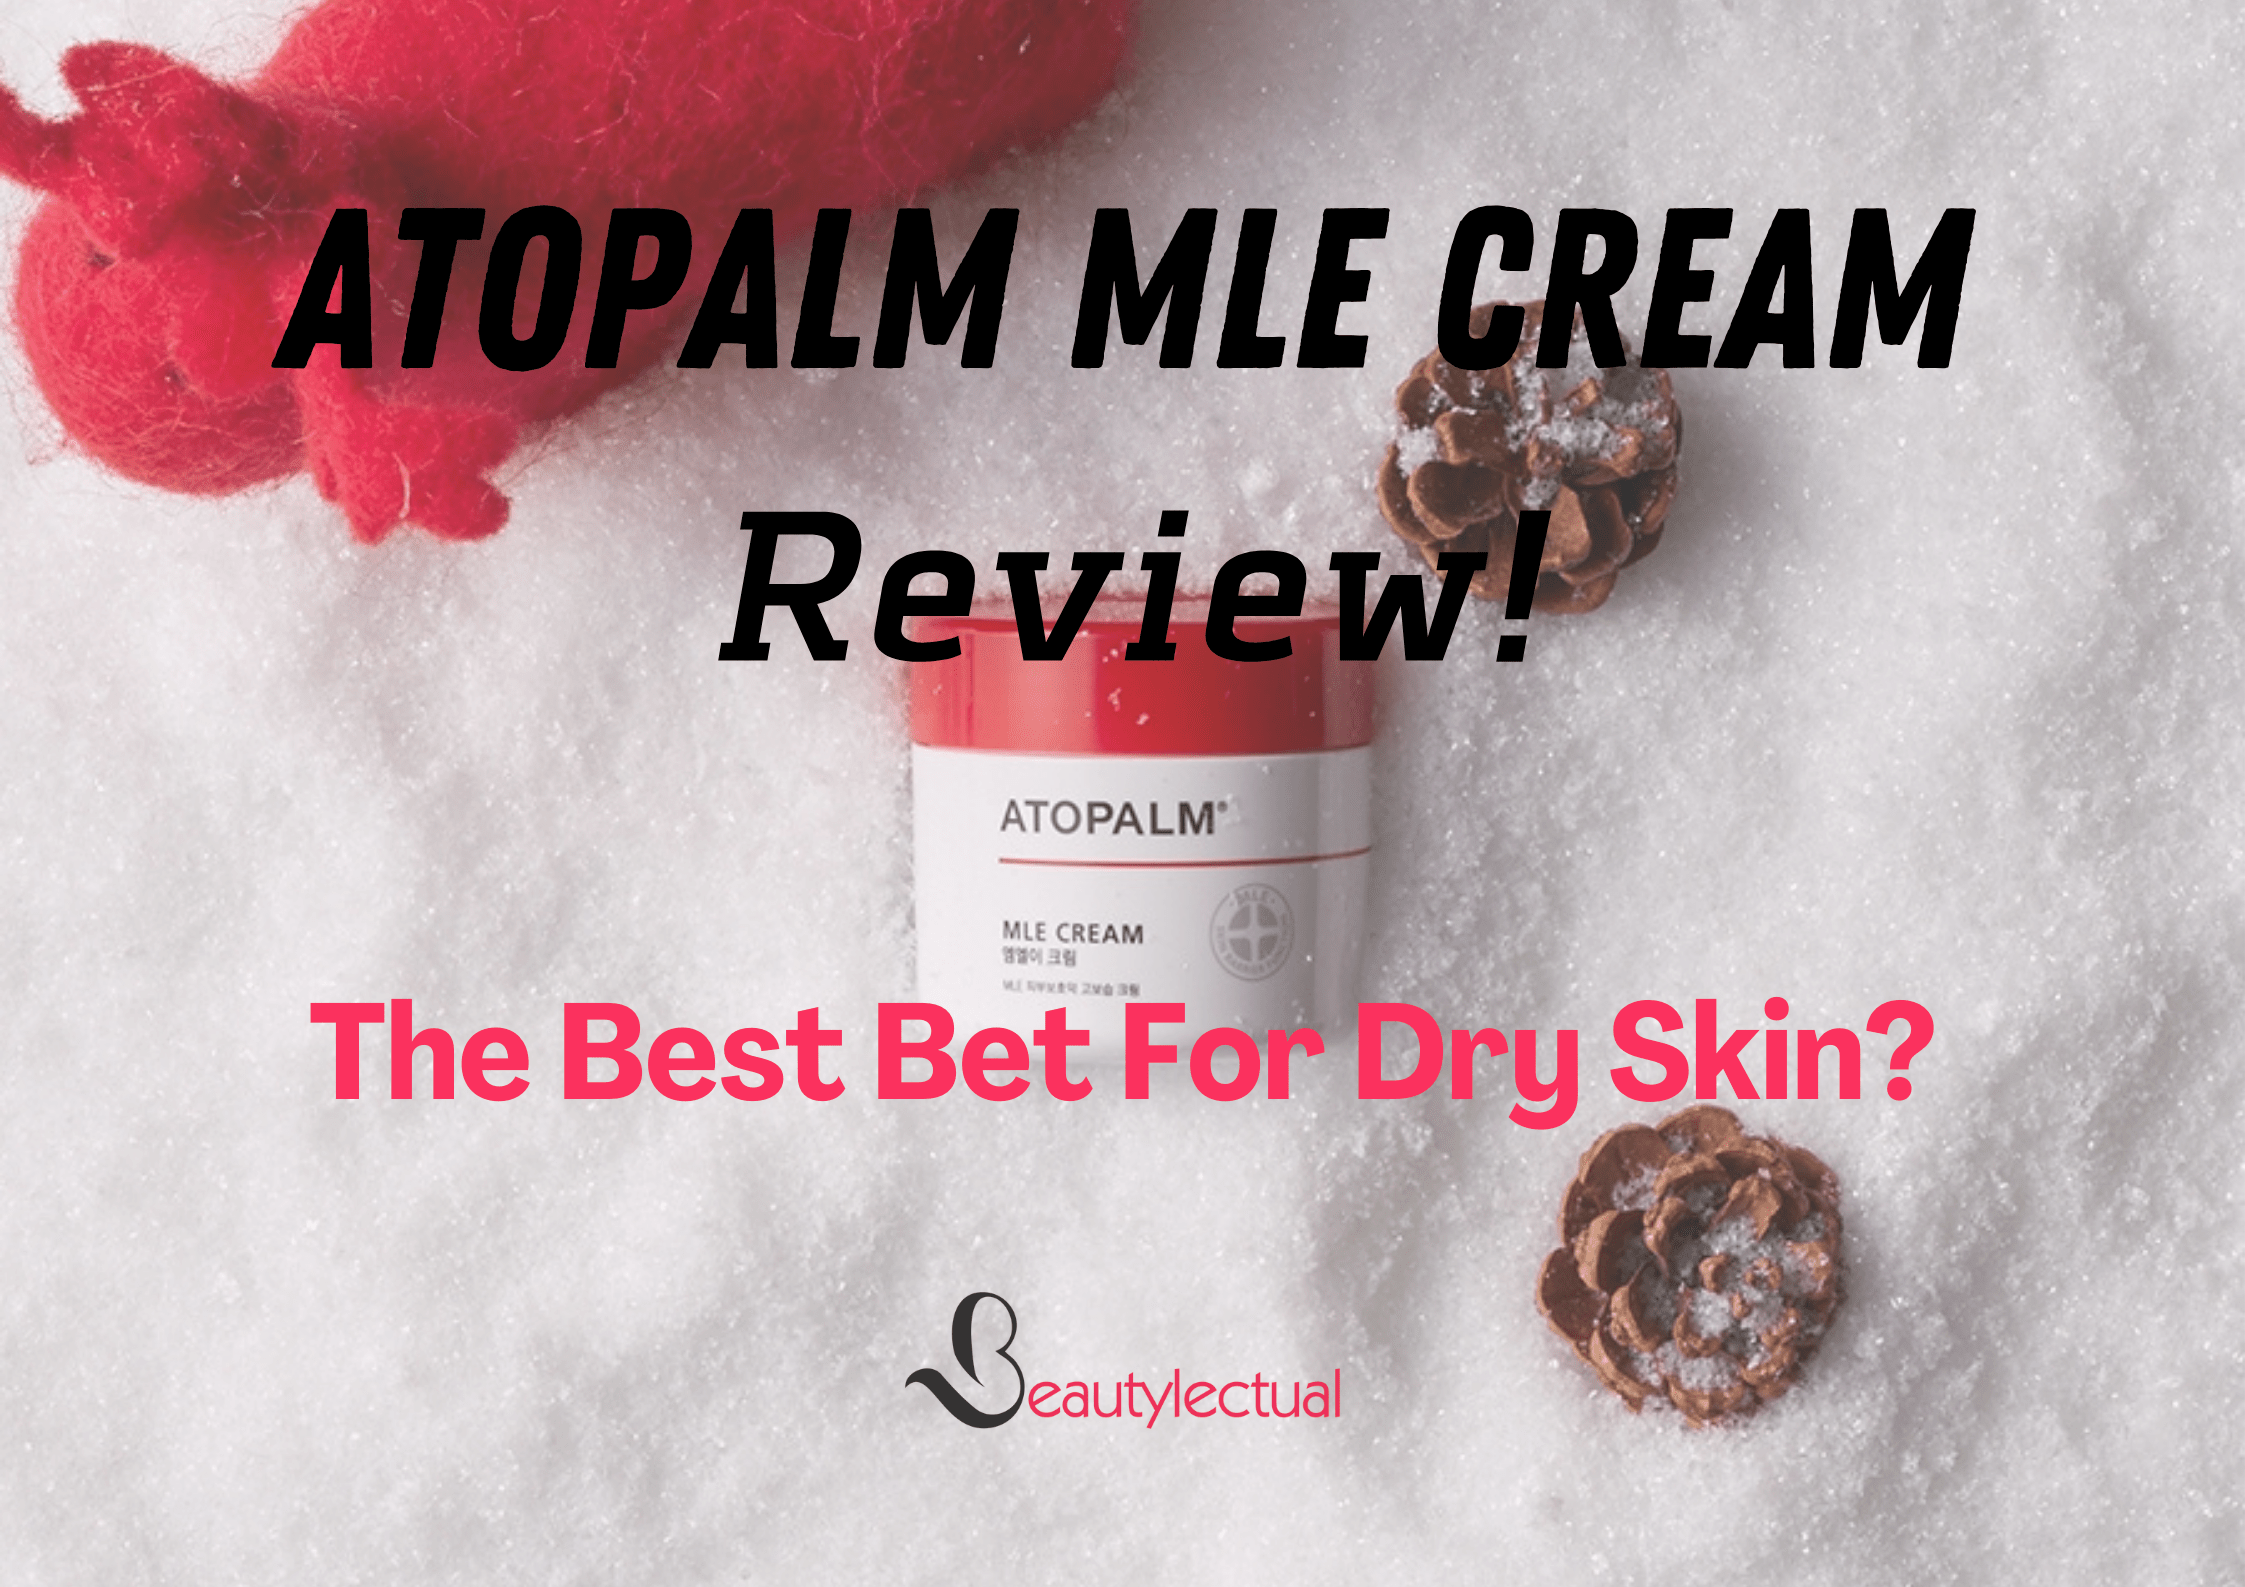 Atopalm-MLE-Cream review